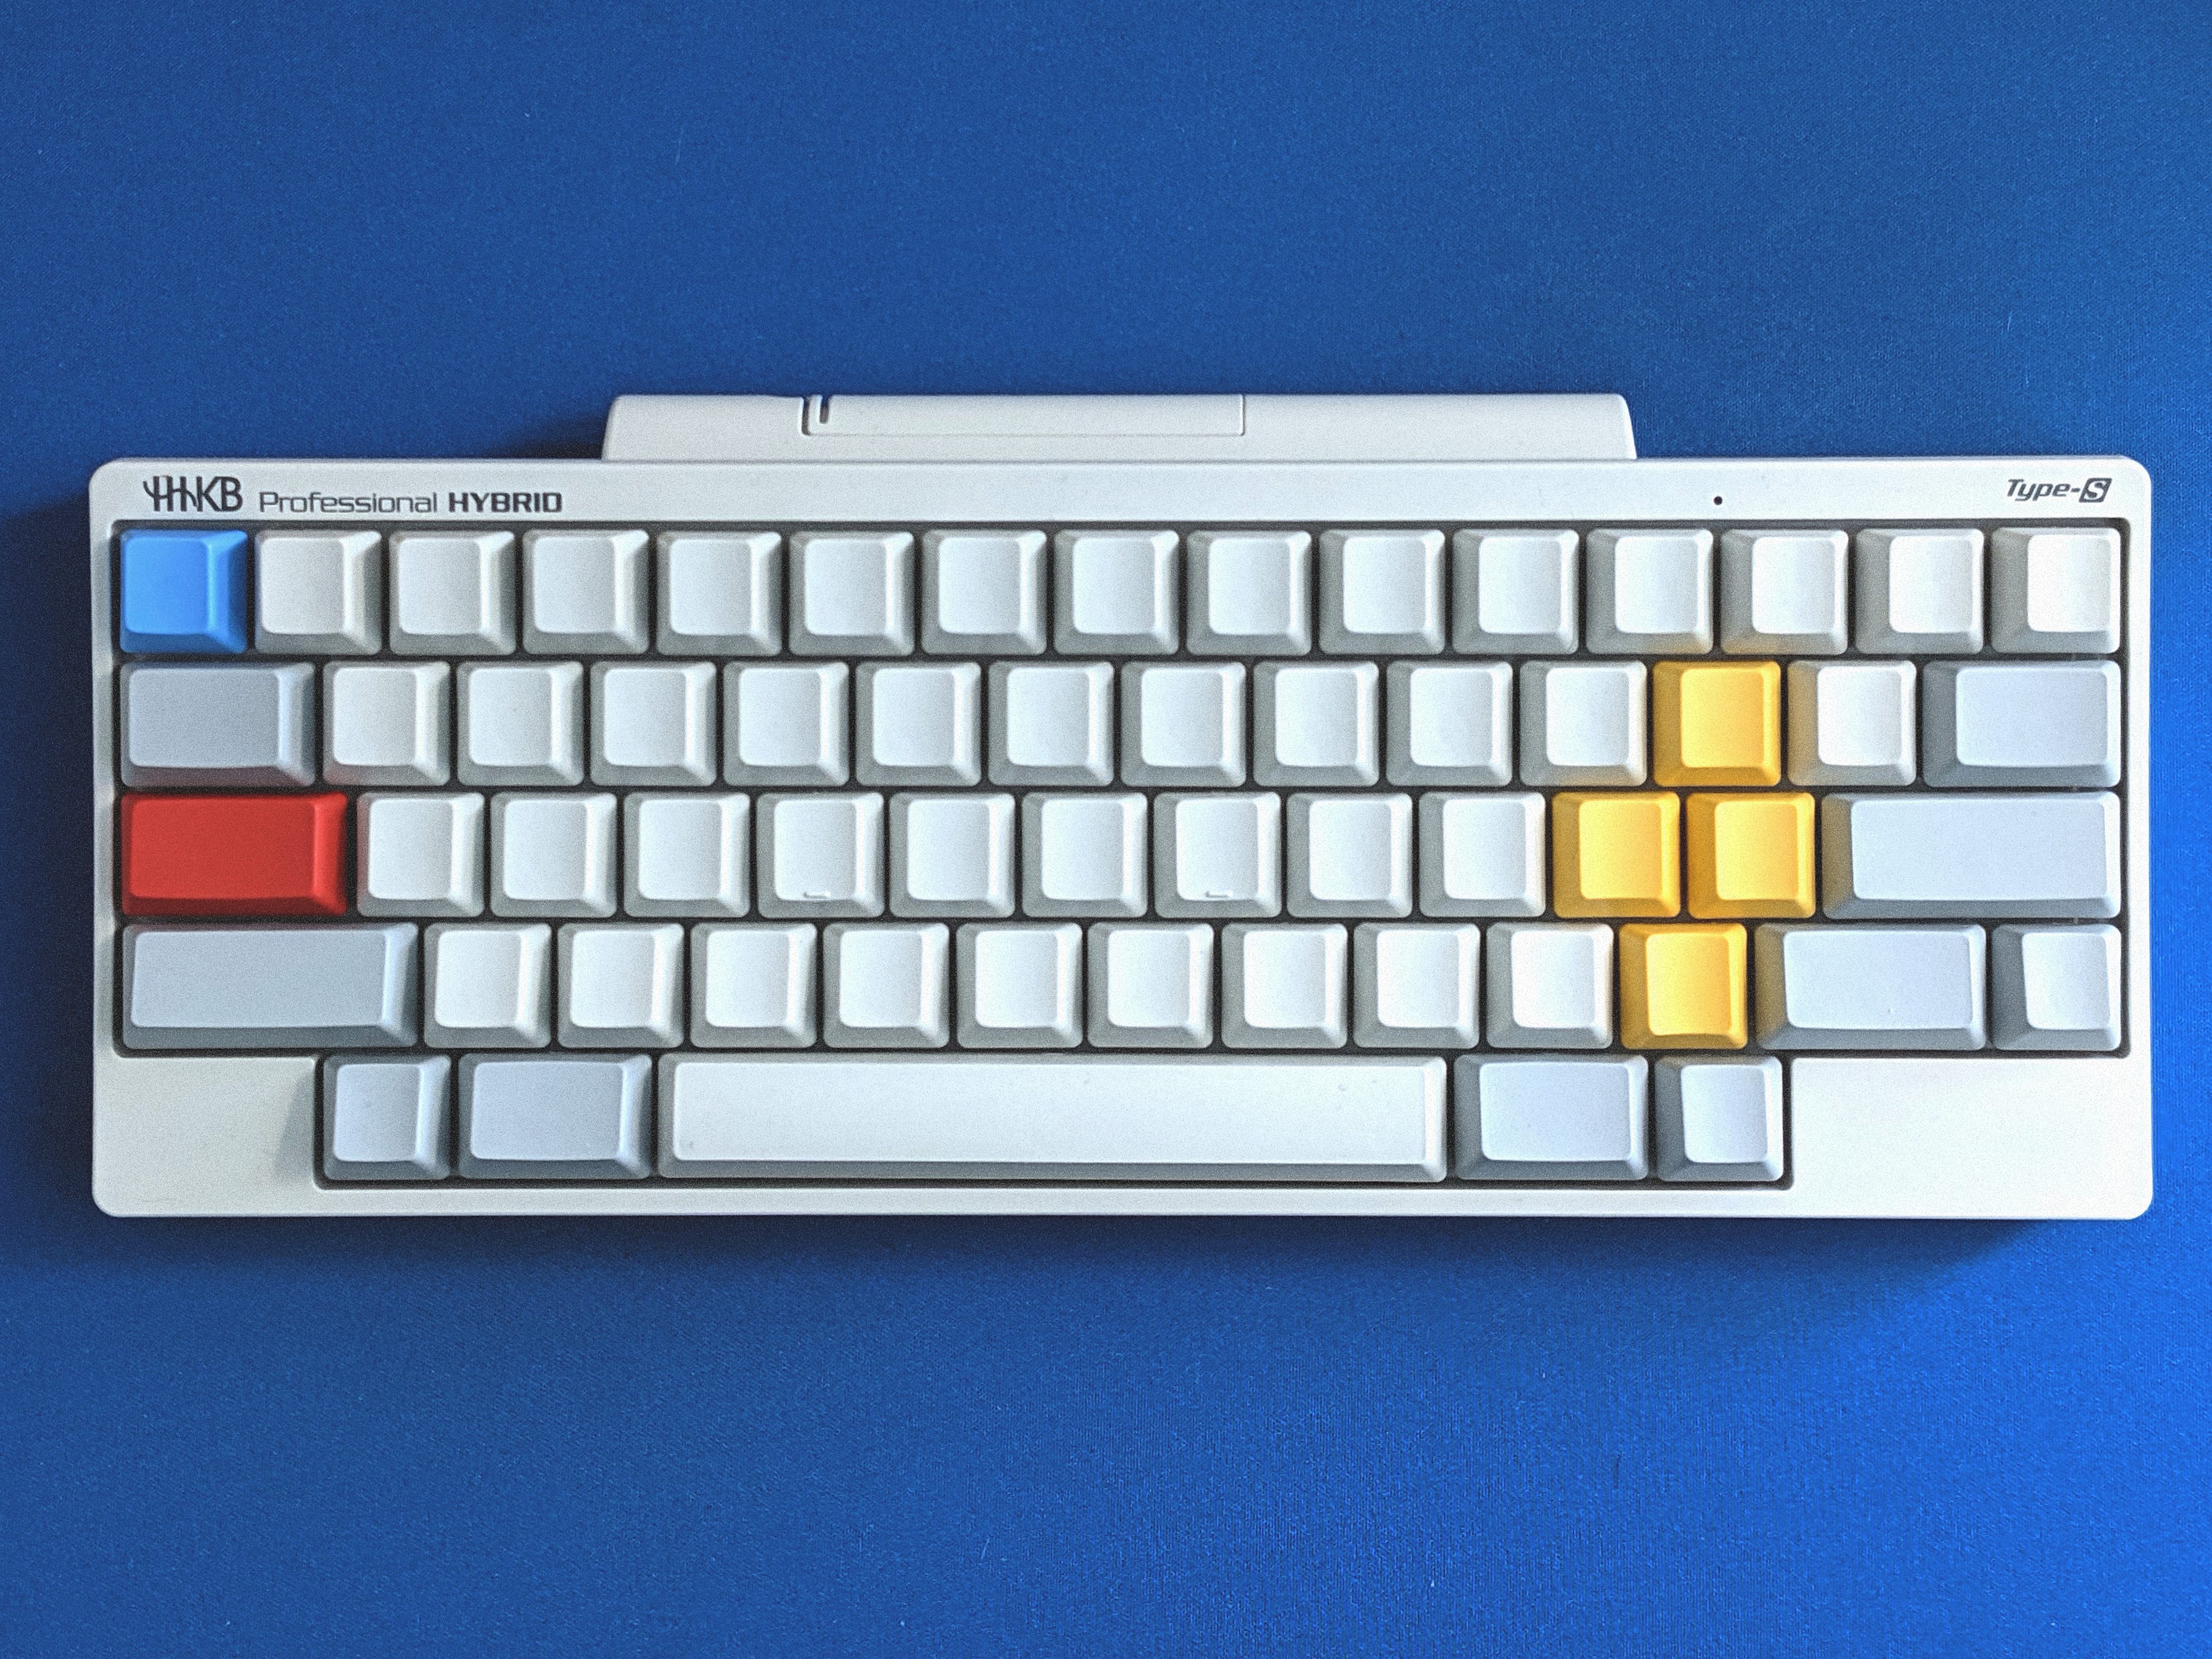 GitHub - skarrmann/umbra: 24 key ergonomic keyboard with self-encasing PCB.